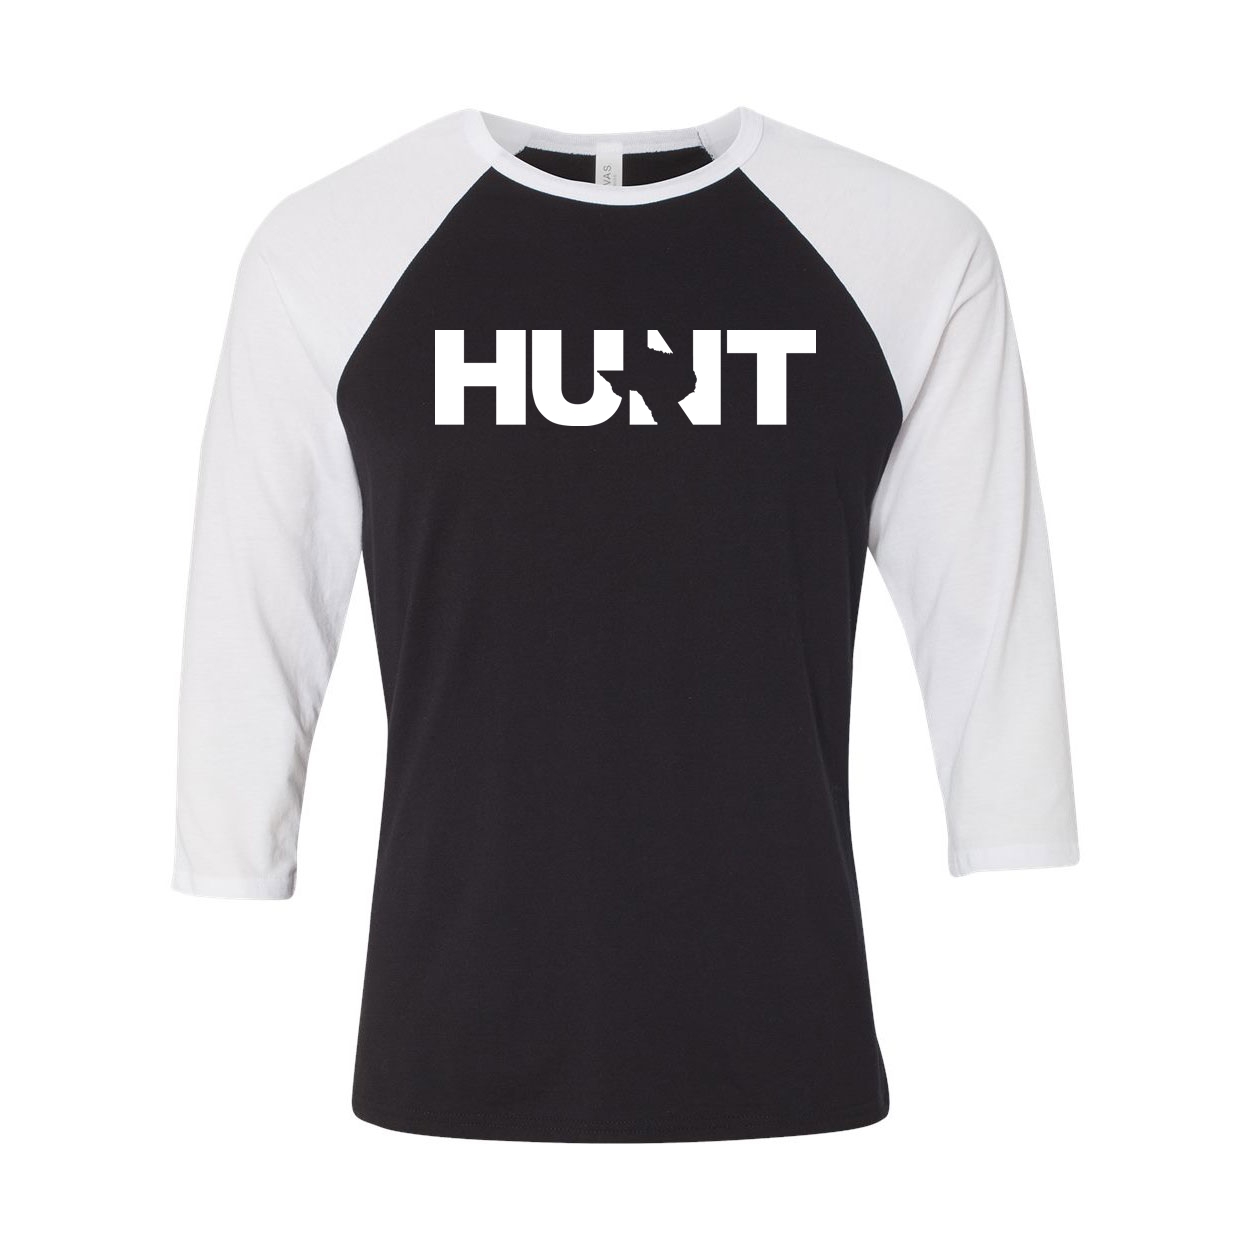 Hunt Texas Classic Raglan Shirt Black/White (White Logo)